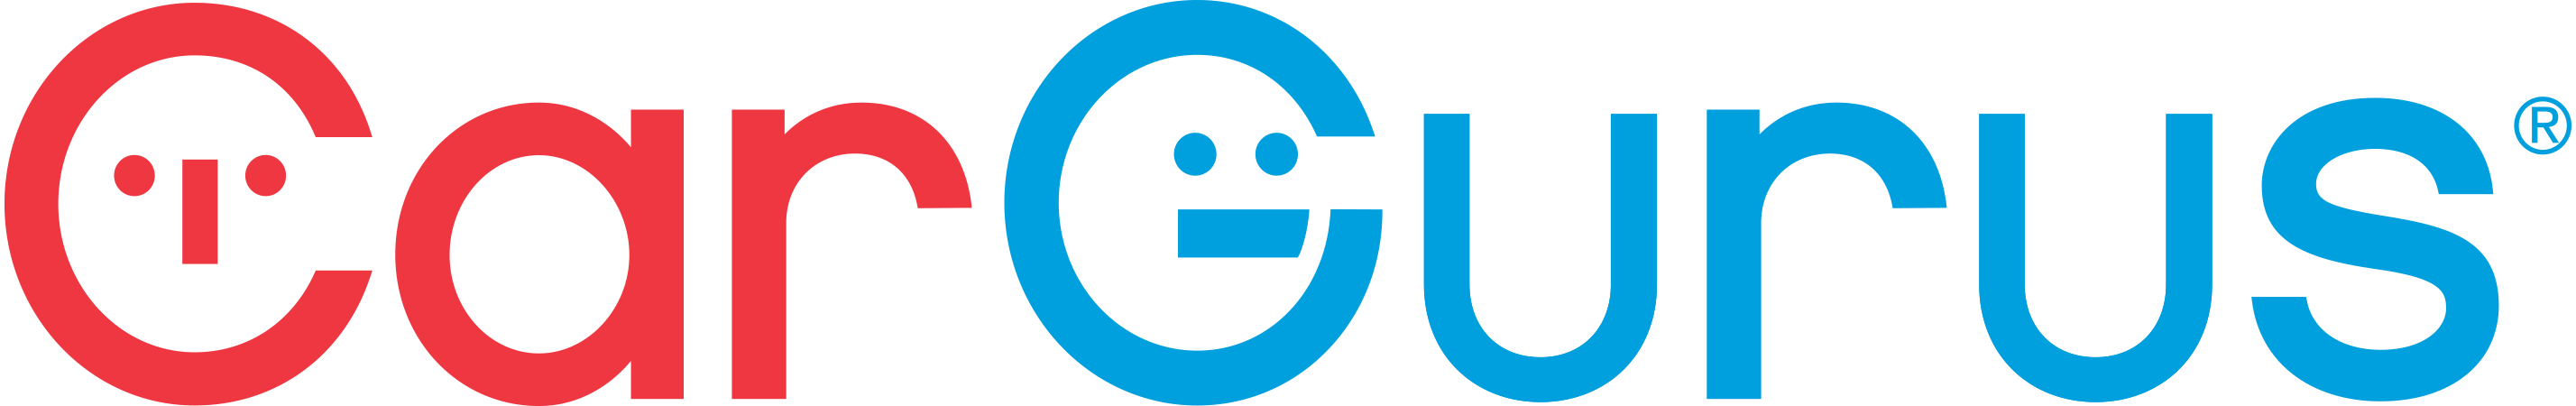 CG logo.png